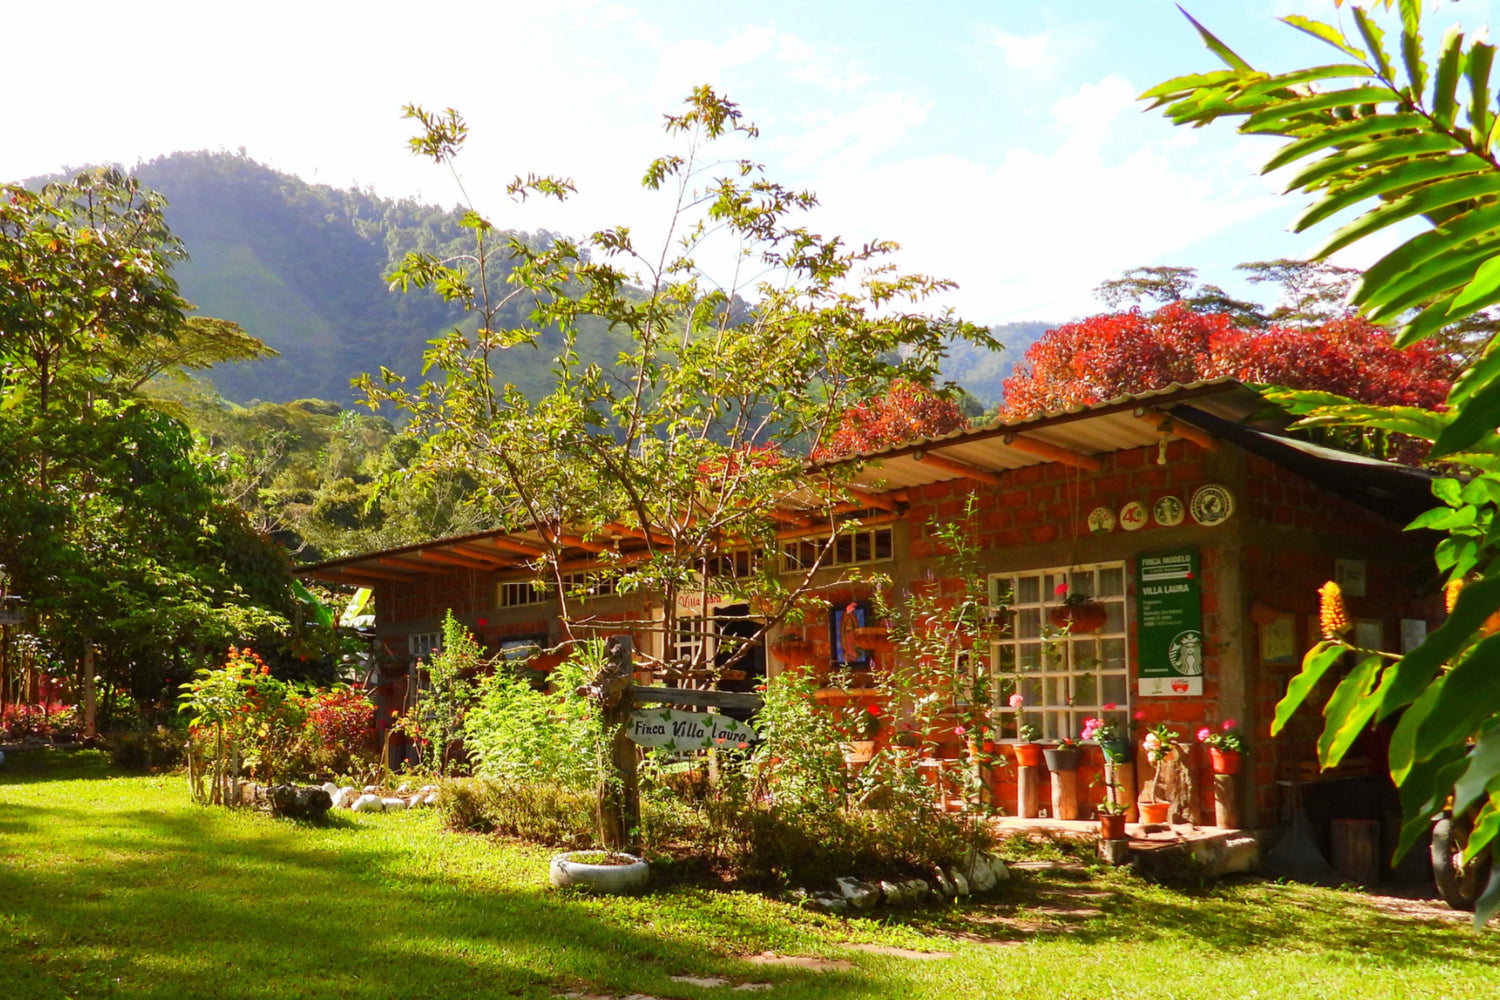 eco lodge casita with bougainvillea and mountain view